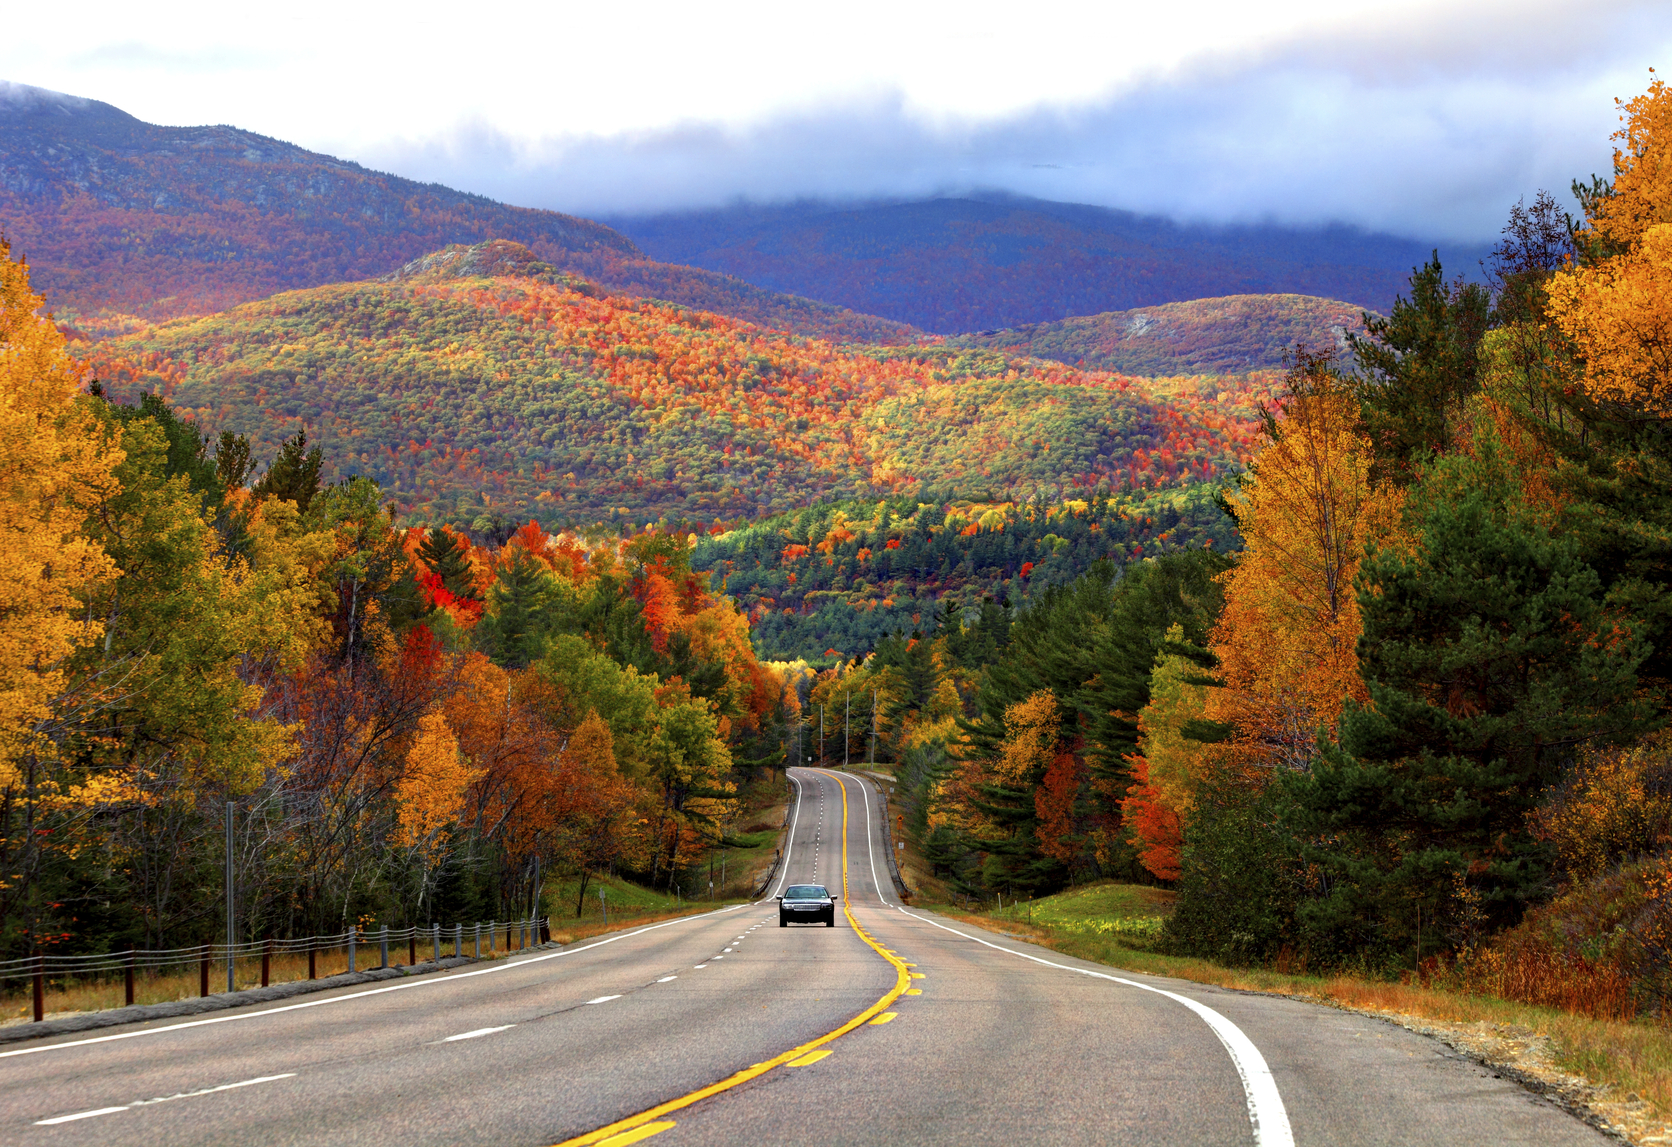 Scenic road in the Adirondacks region of New York during the autumn foliage season